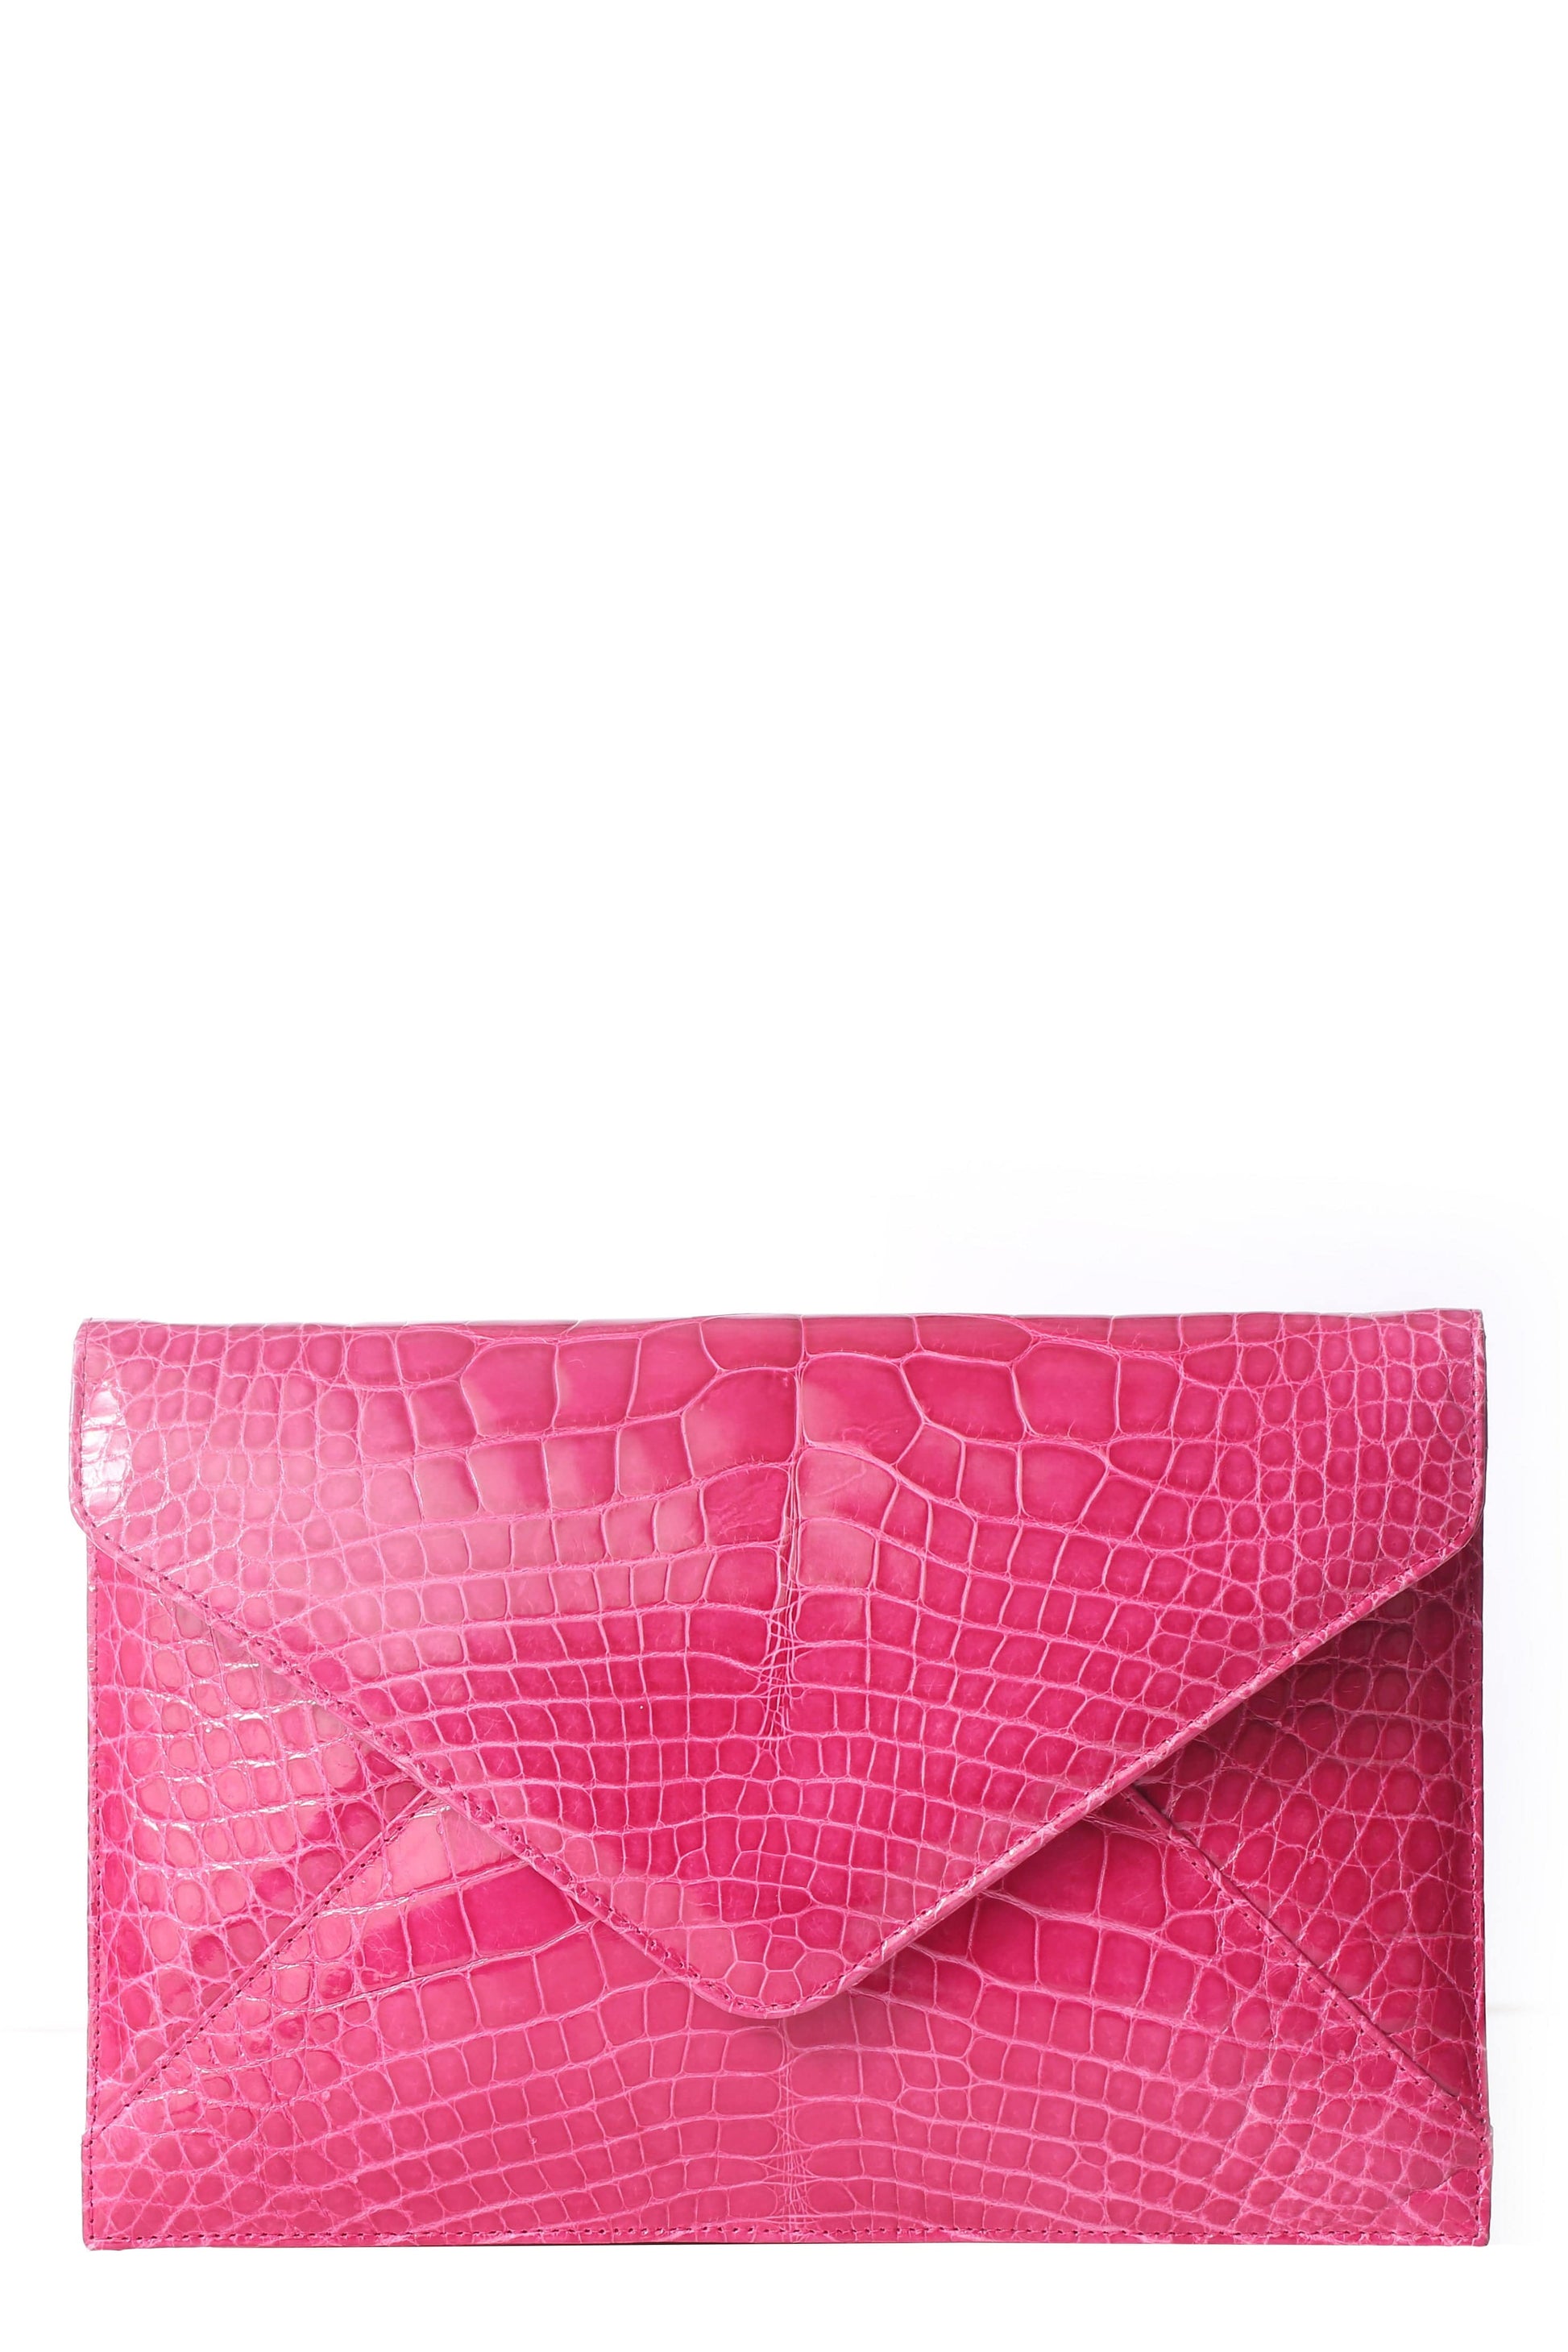 JADA LOVELESS-Bright Pink Alligator Envelope Clutch-PINK